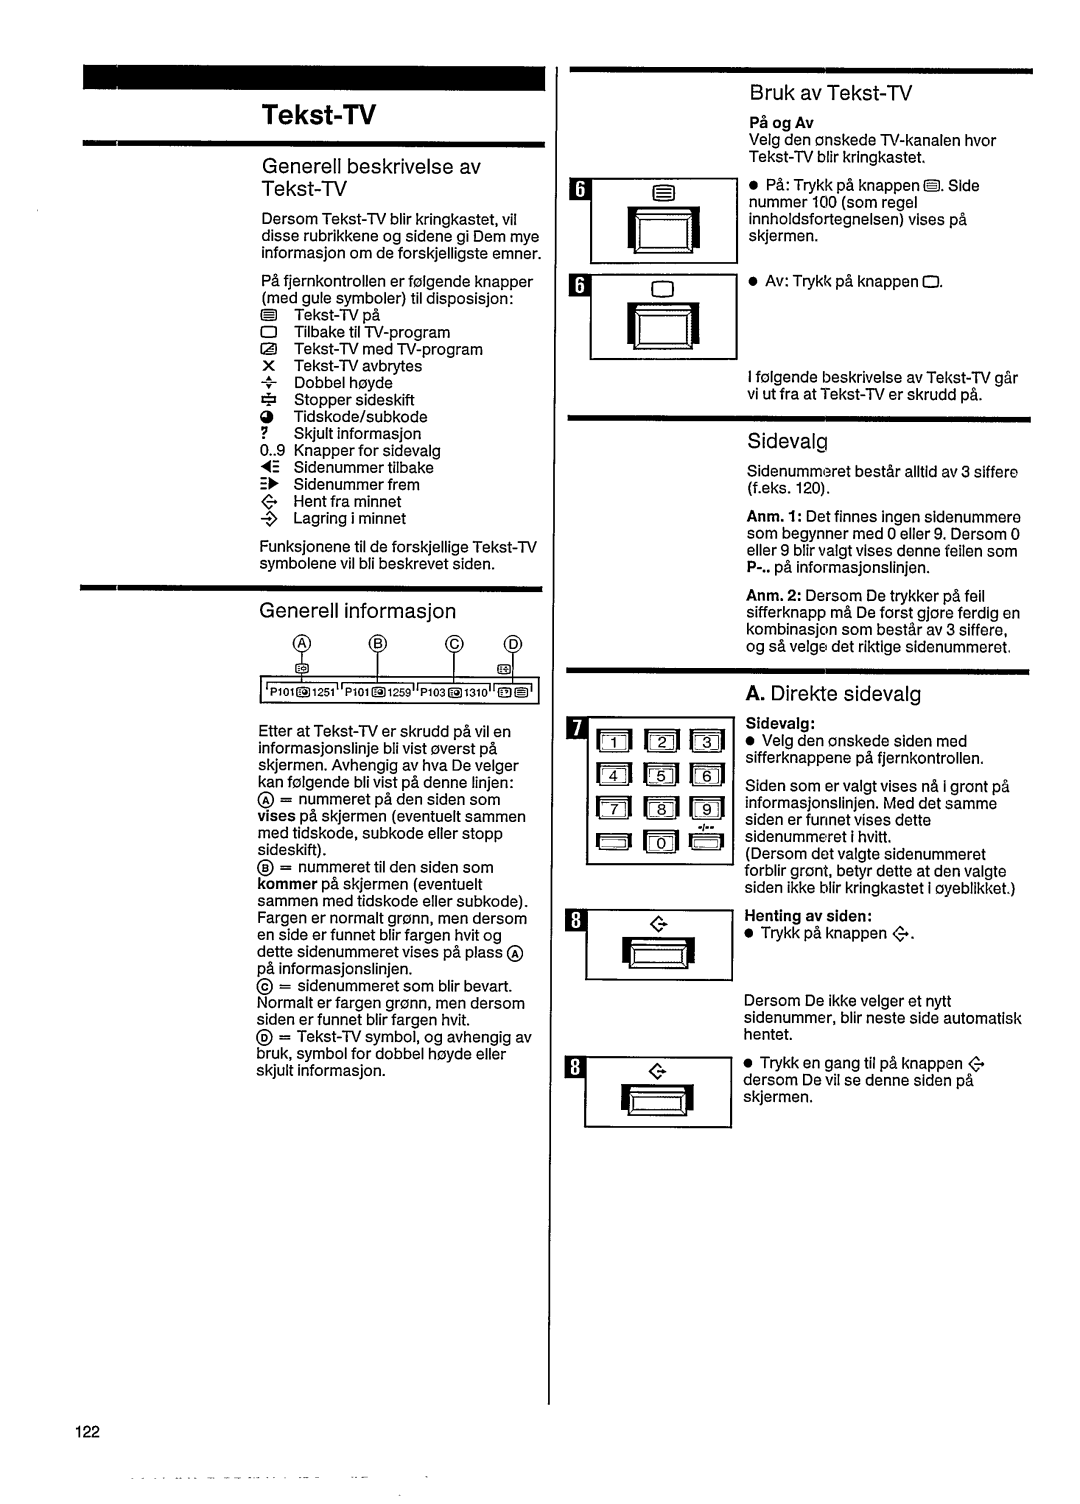 Philips 33CE7536 manual 